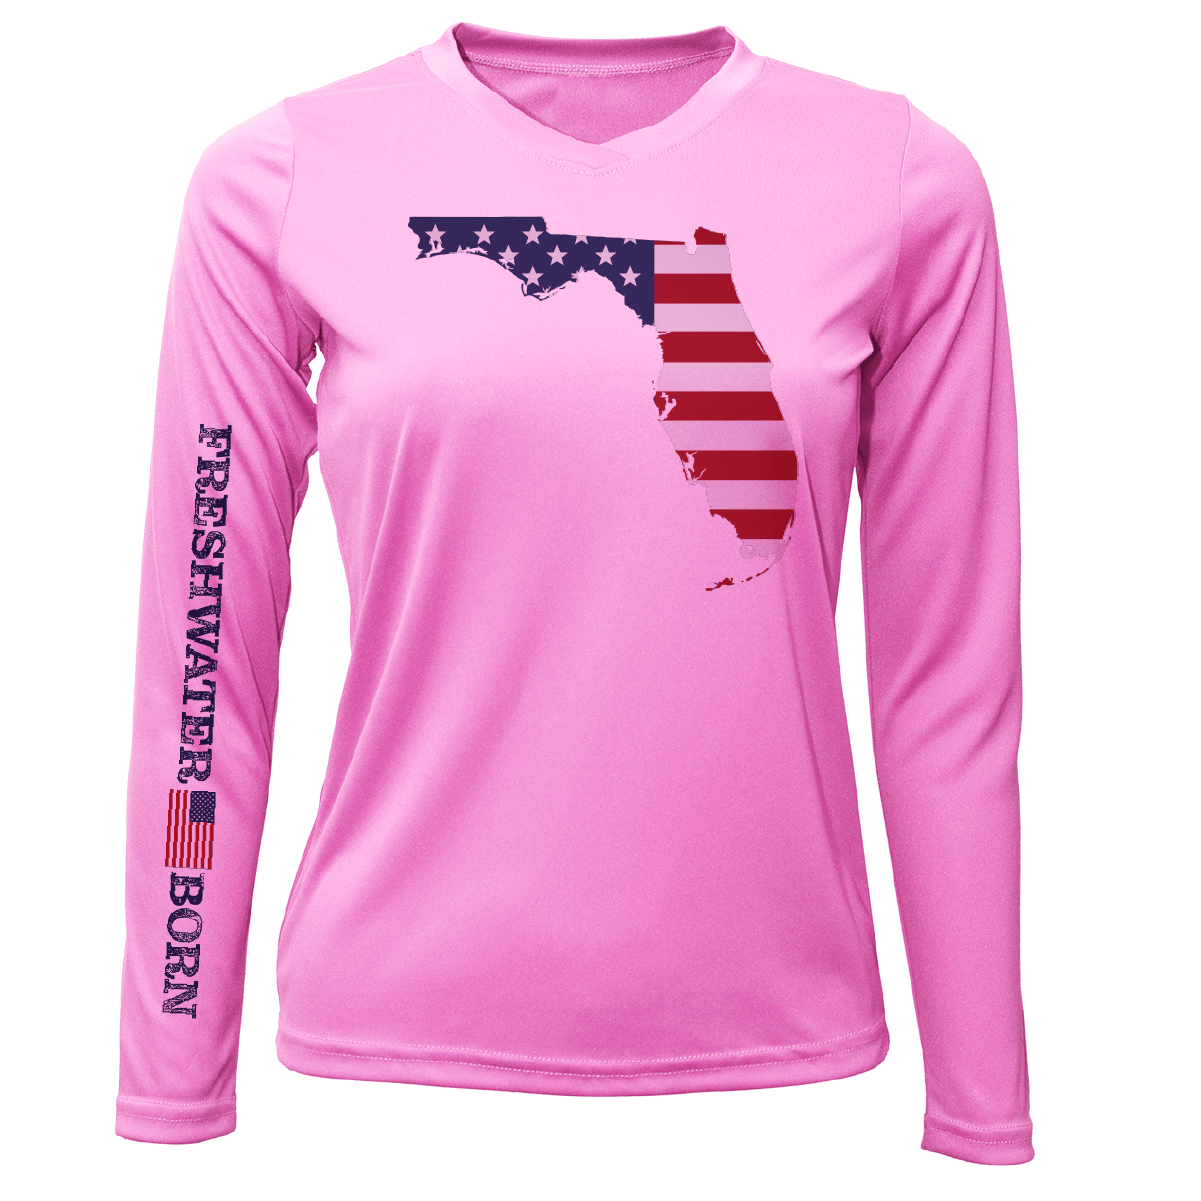 Saltwater Born Shirts State of Florida USA Freshwater Born Women's Long Sleeve UPF 50+ Dry-Fit Shirt